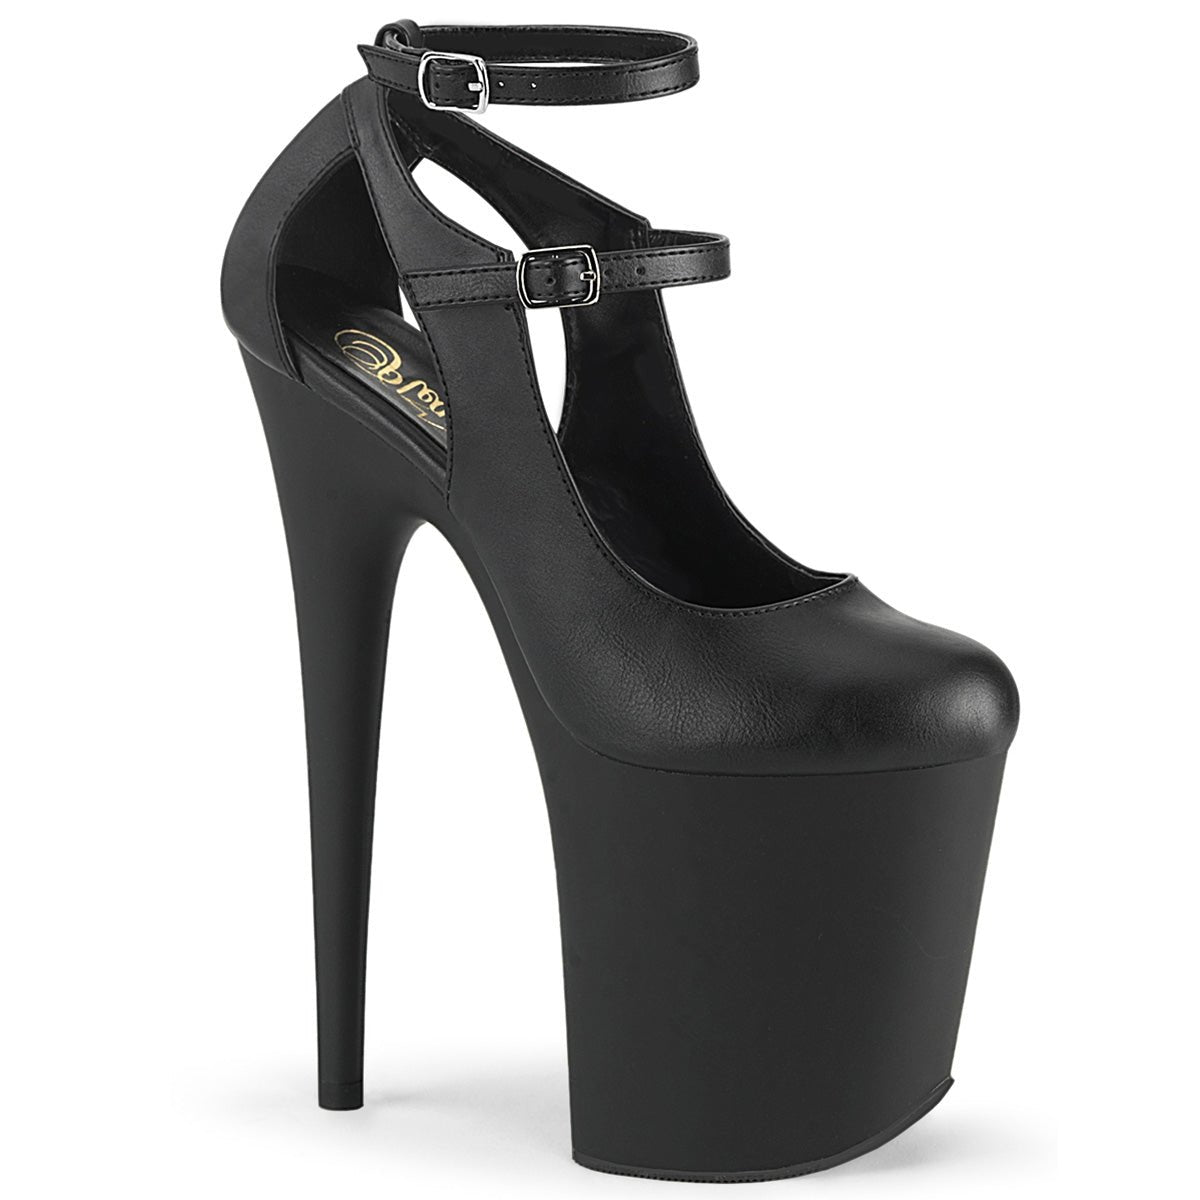 Pleaser Shoes FLAMINGO-850 | 8 INCH Pleaser Heel Mary Jane Pump - Matte Black - Aphrodite Active